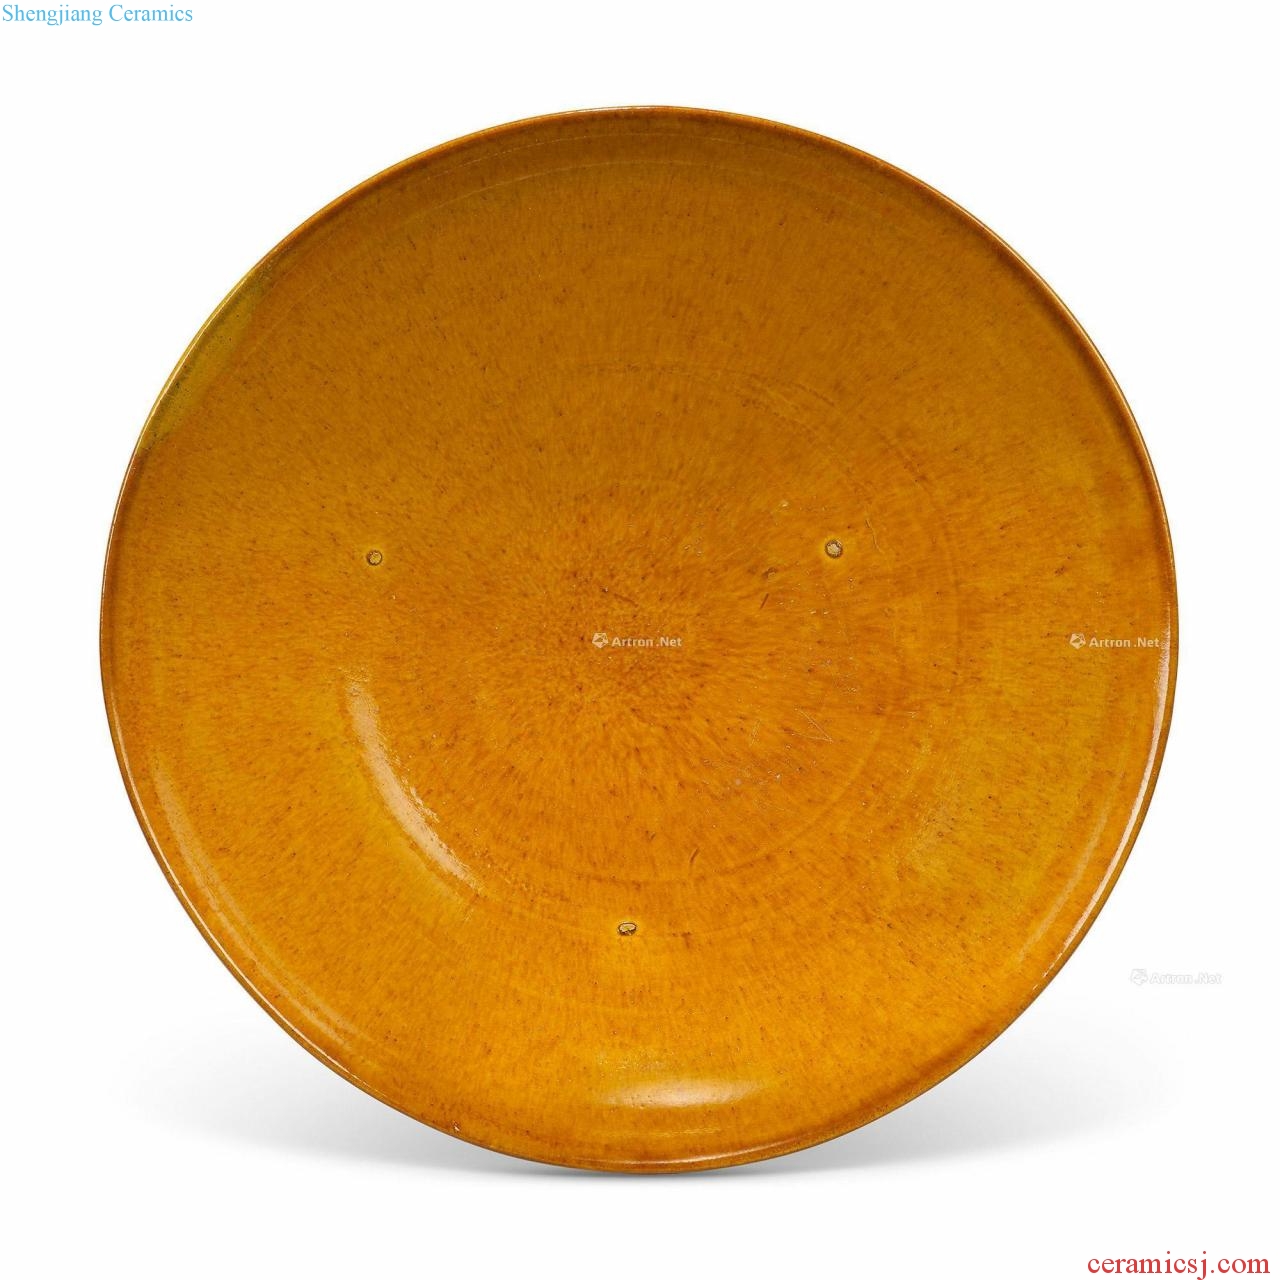 Liao brown glaze plate